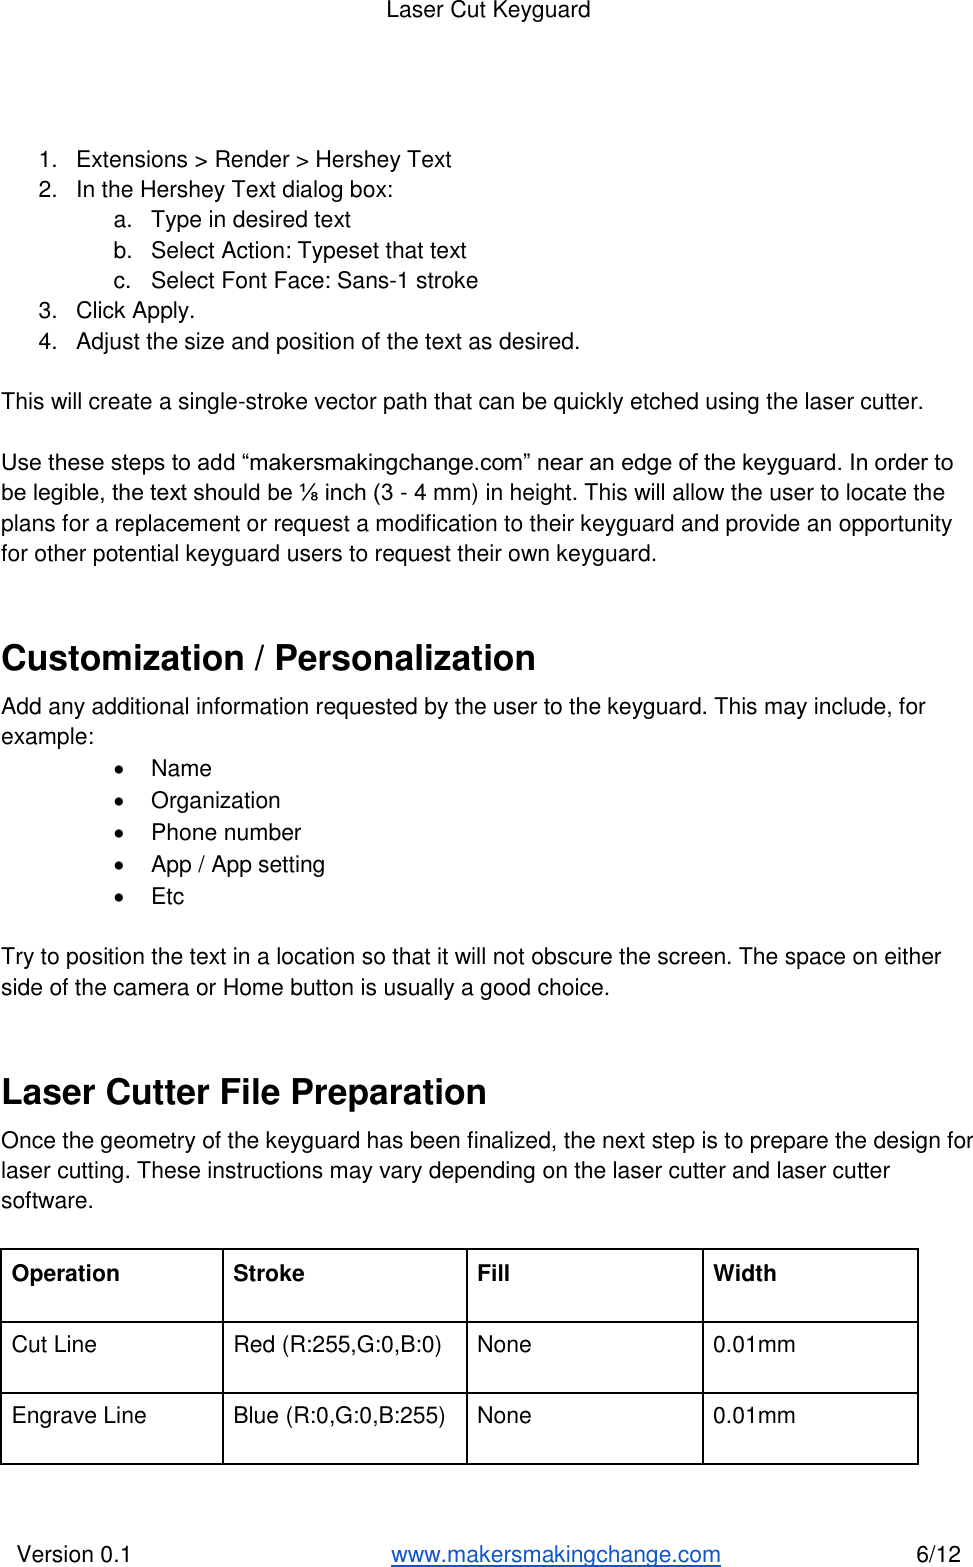 Page 6 of 12 - Lasercut Keyguard Instructions V0.1